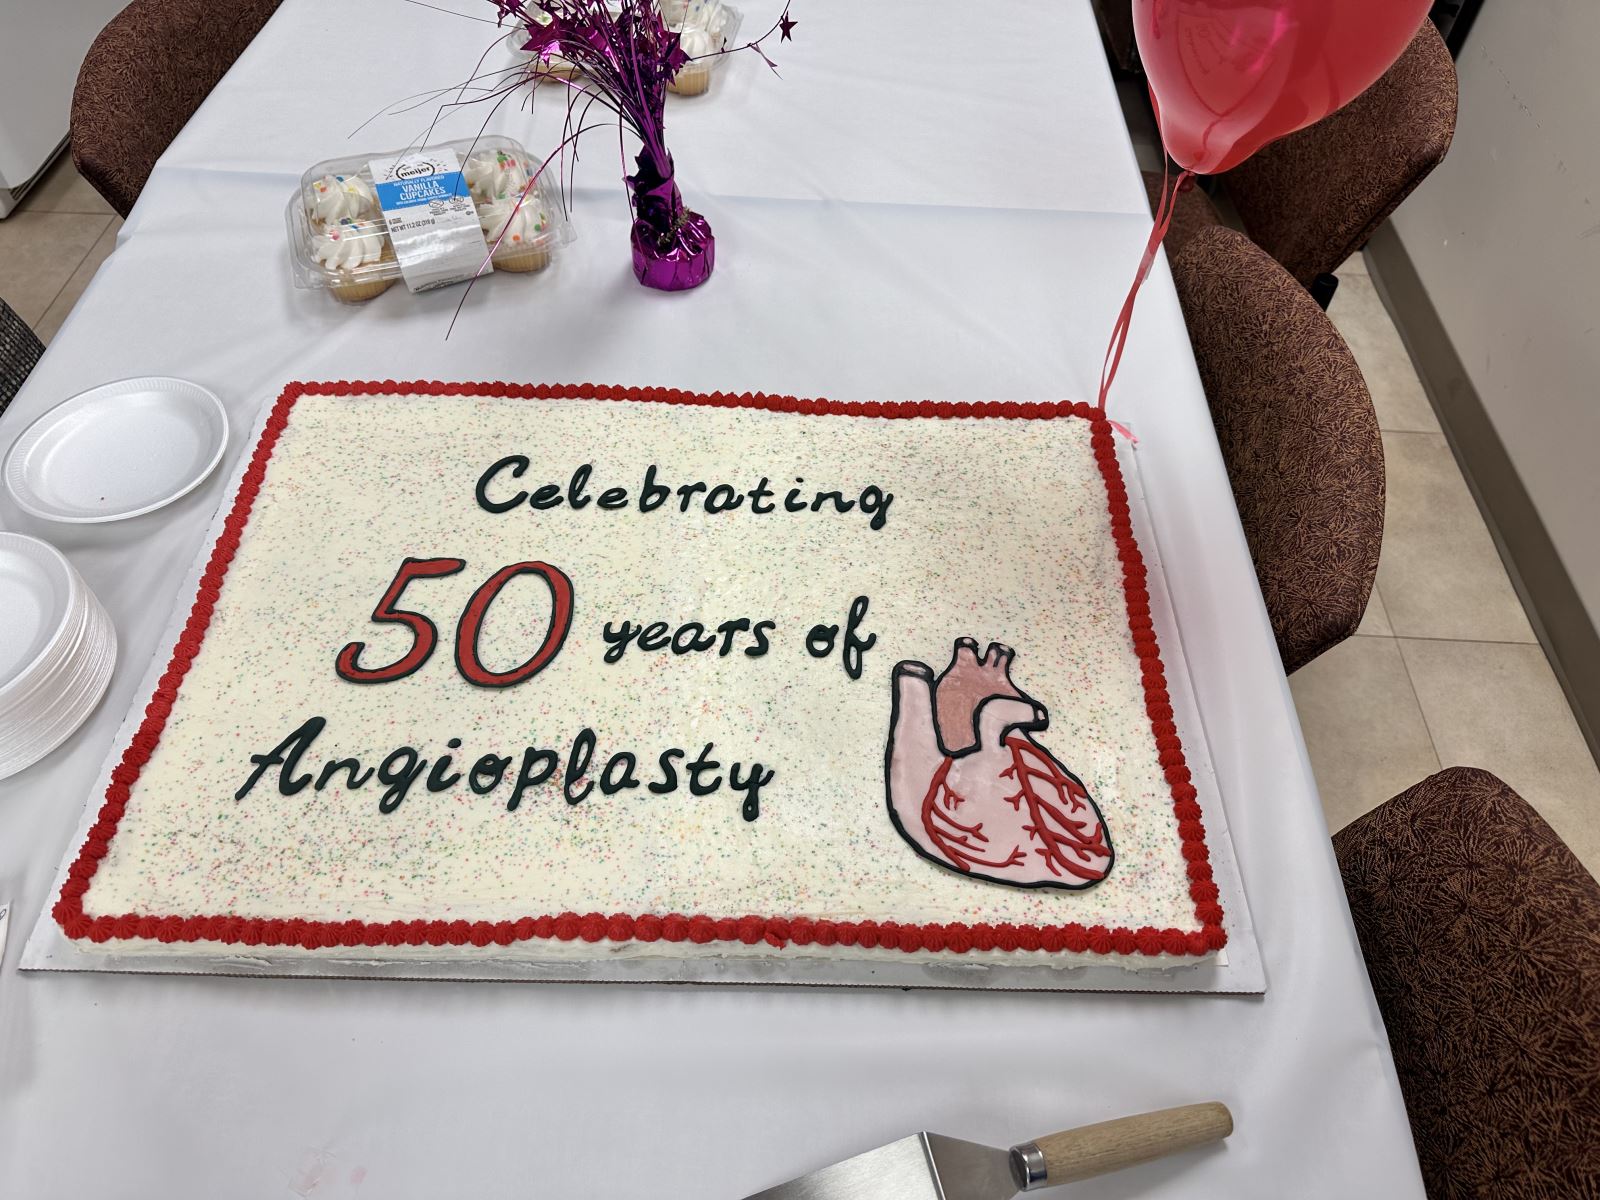 White Cake 50 years if angioplasty written in icing